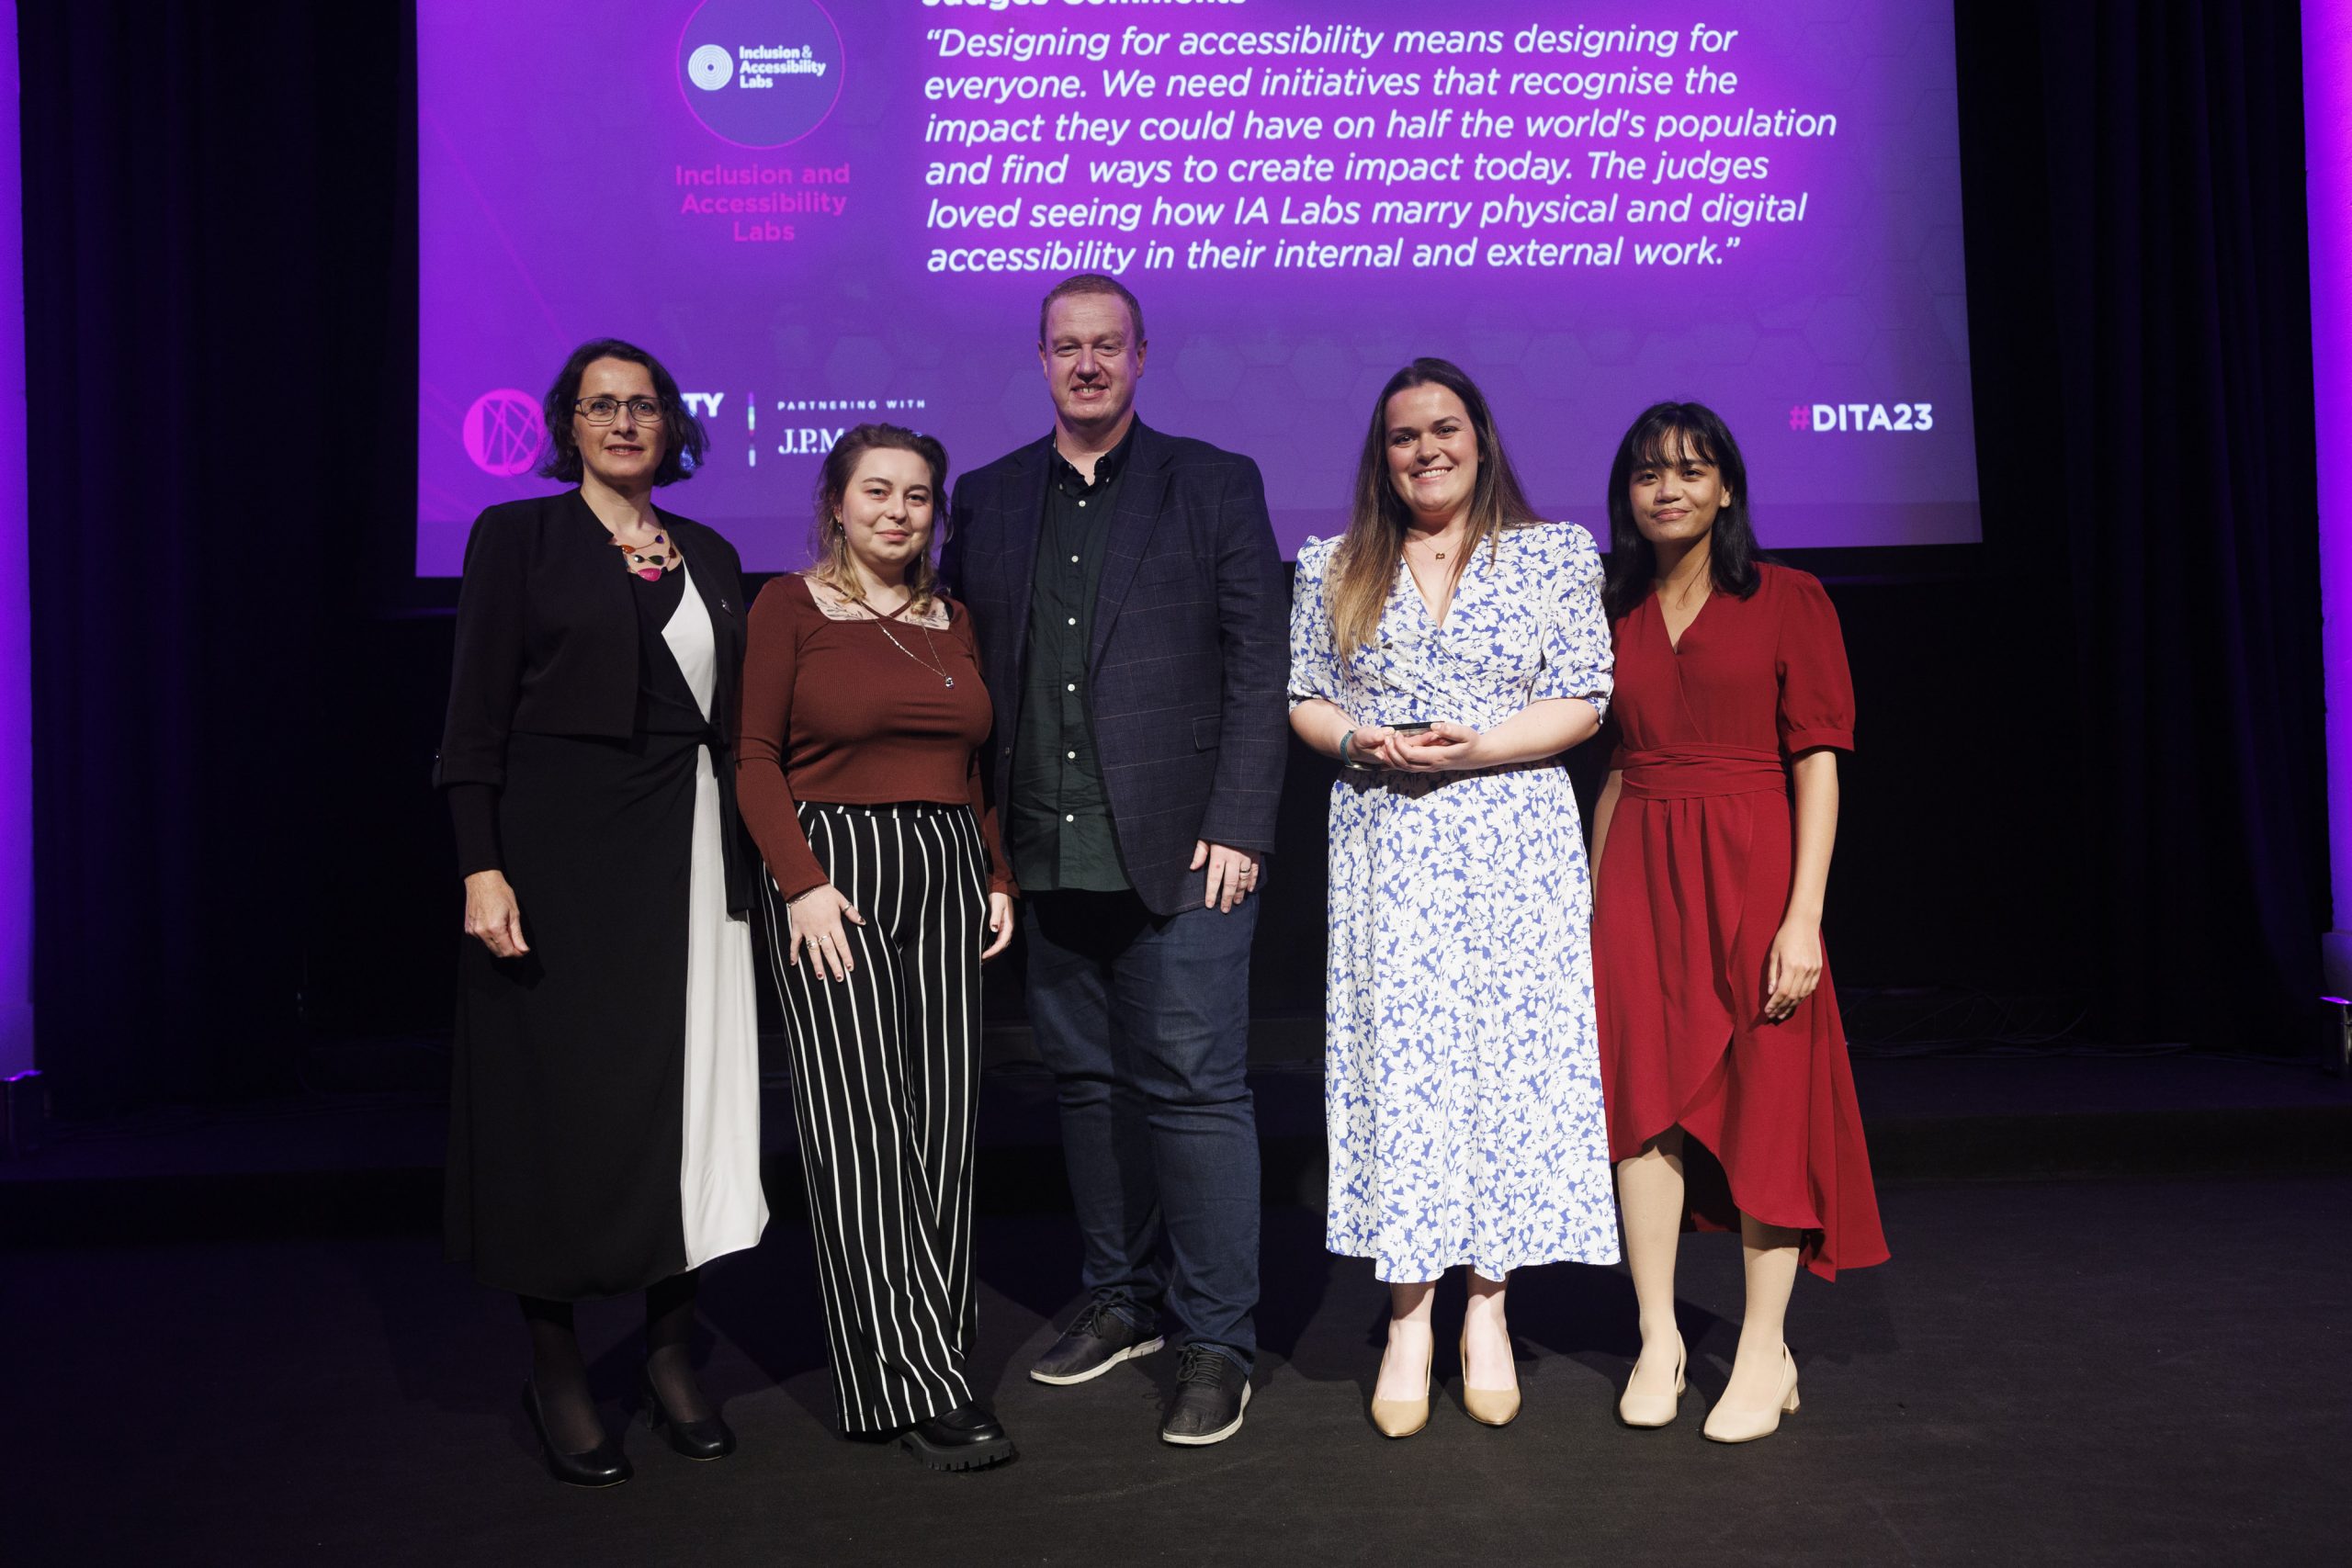 Adela Buliman, Kyran O'Mahoney, Ellie Owens and Diana Penamora being awarded at the Diversity in Tech Awards